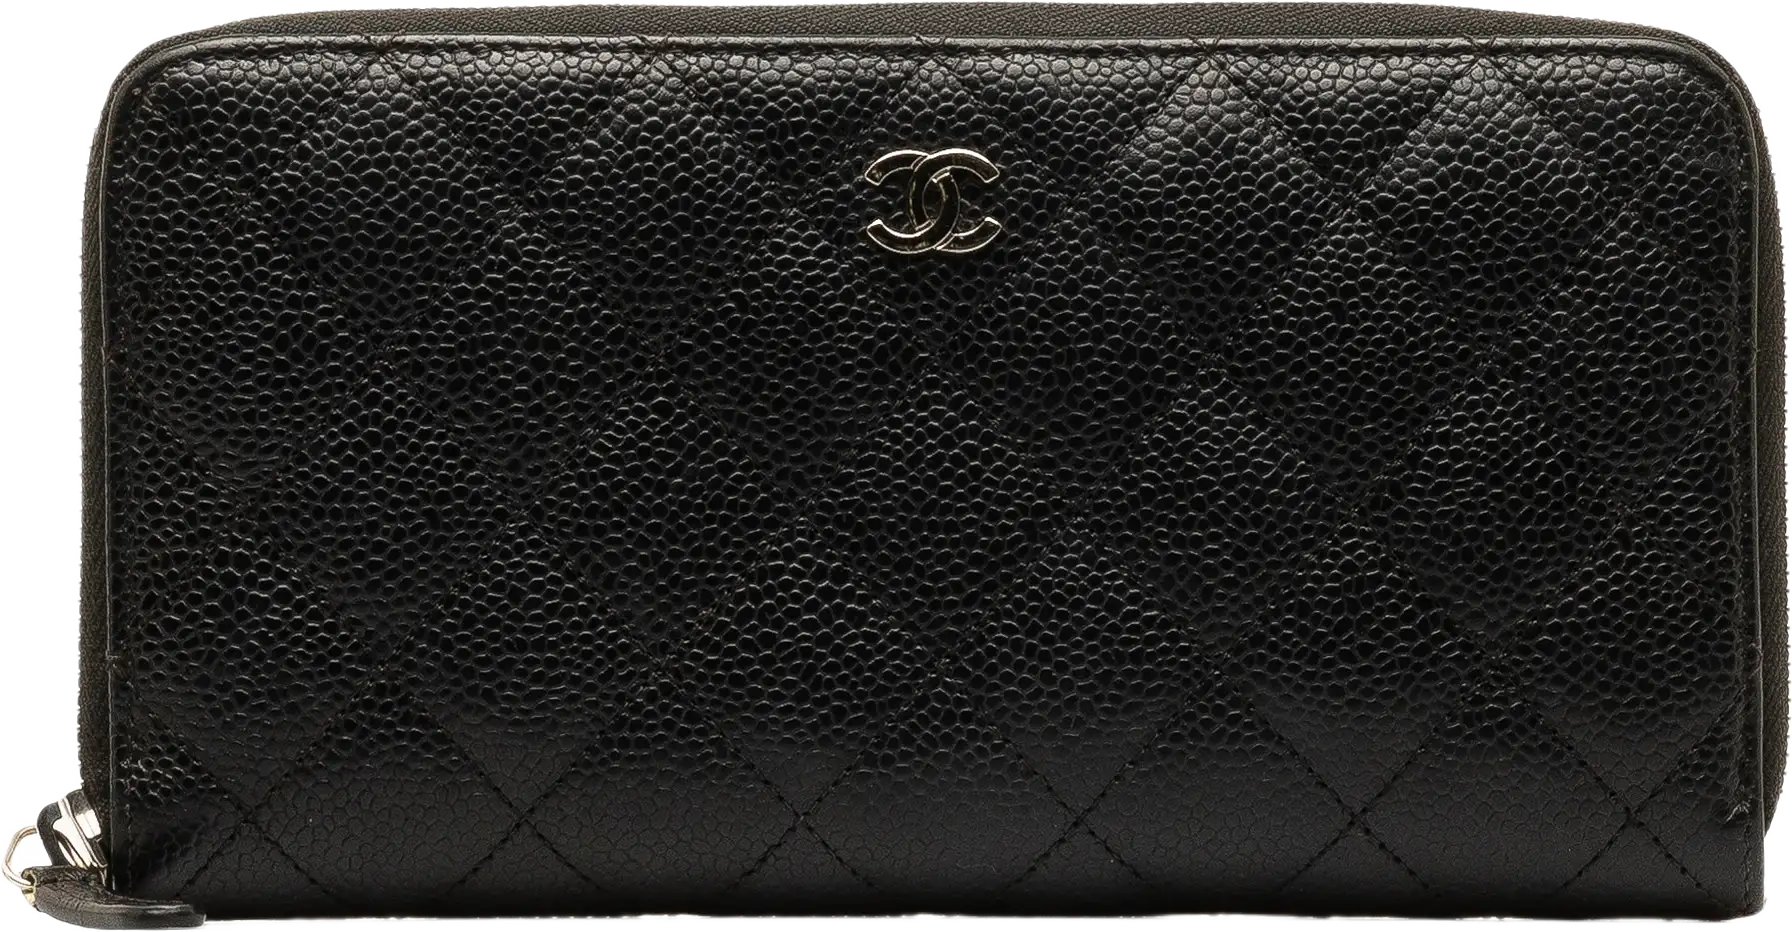 Chanel Cc Caviar Zip Around Wallet